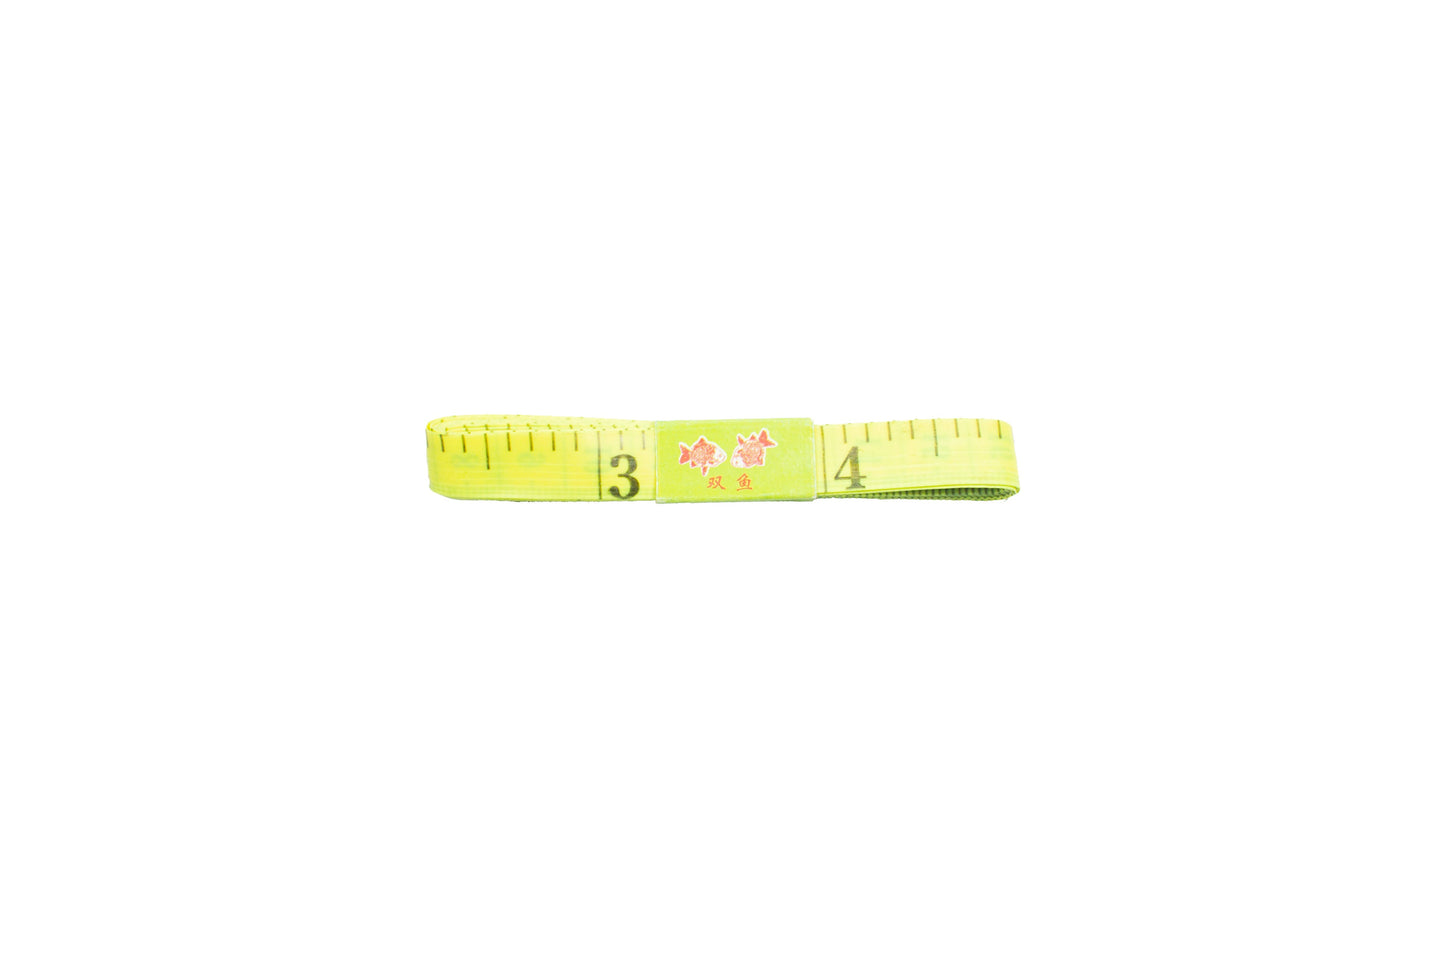 Tape Measurement 11 inches